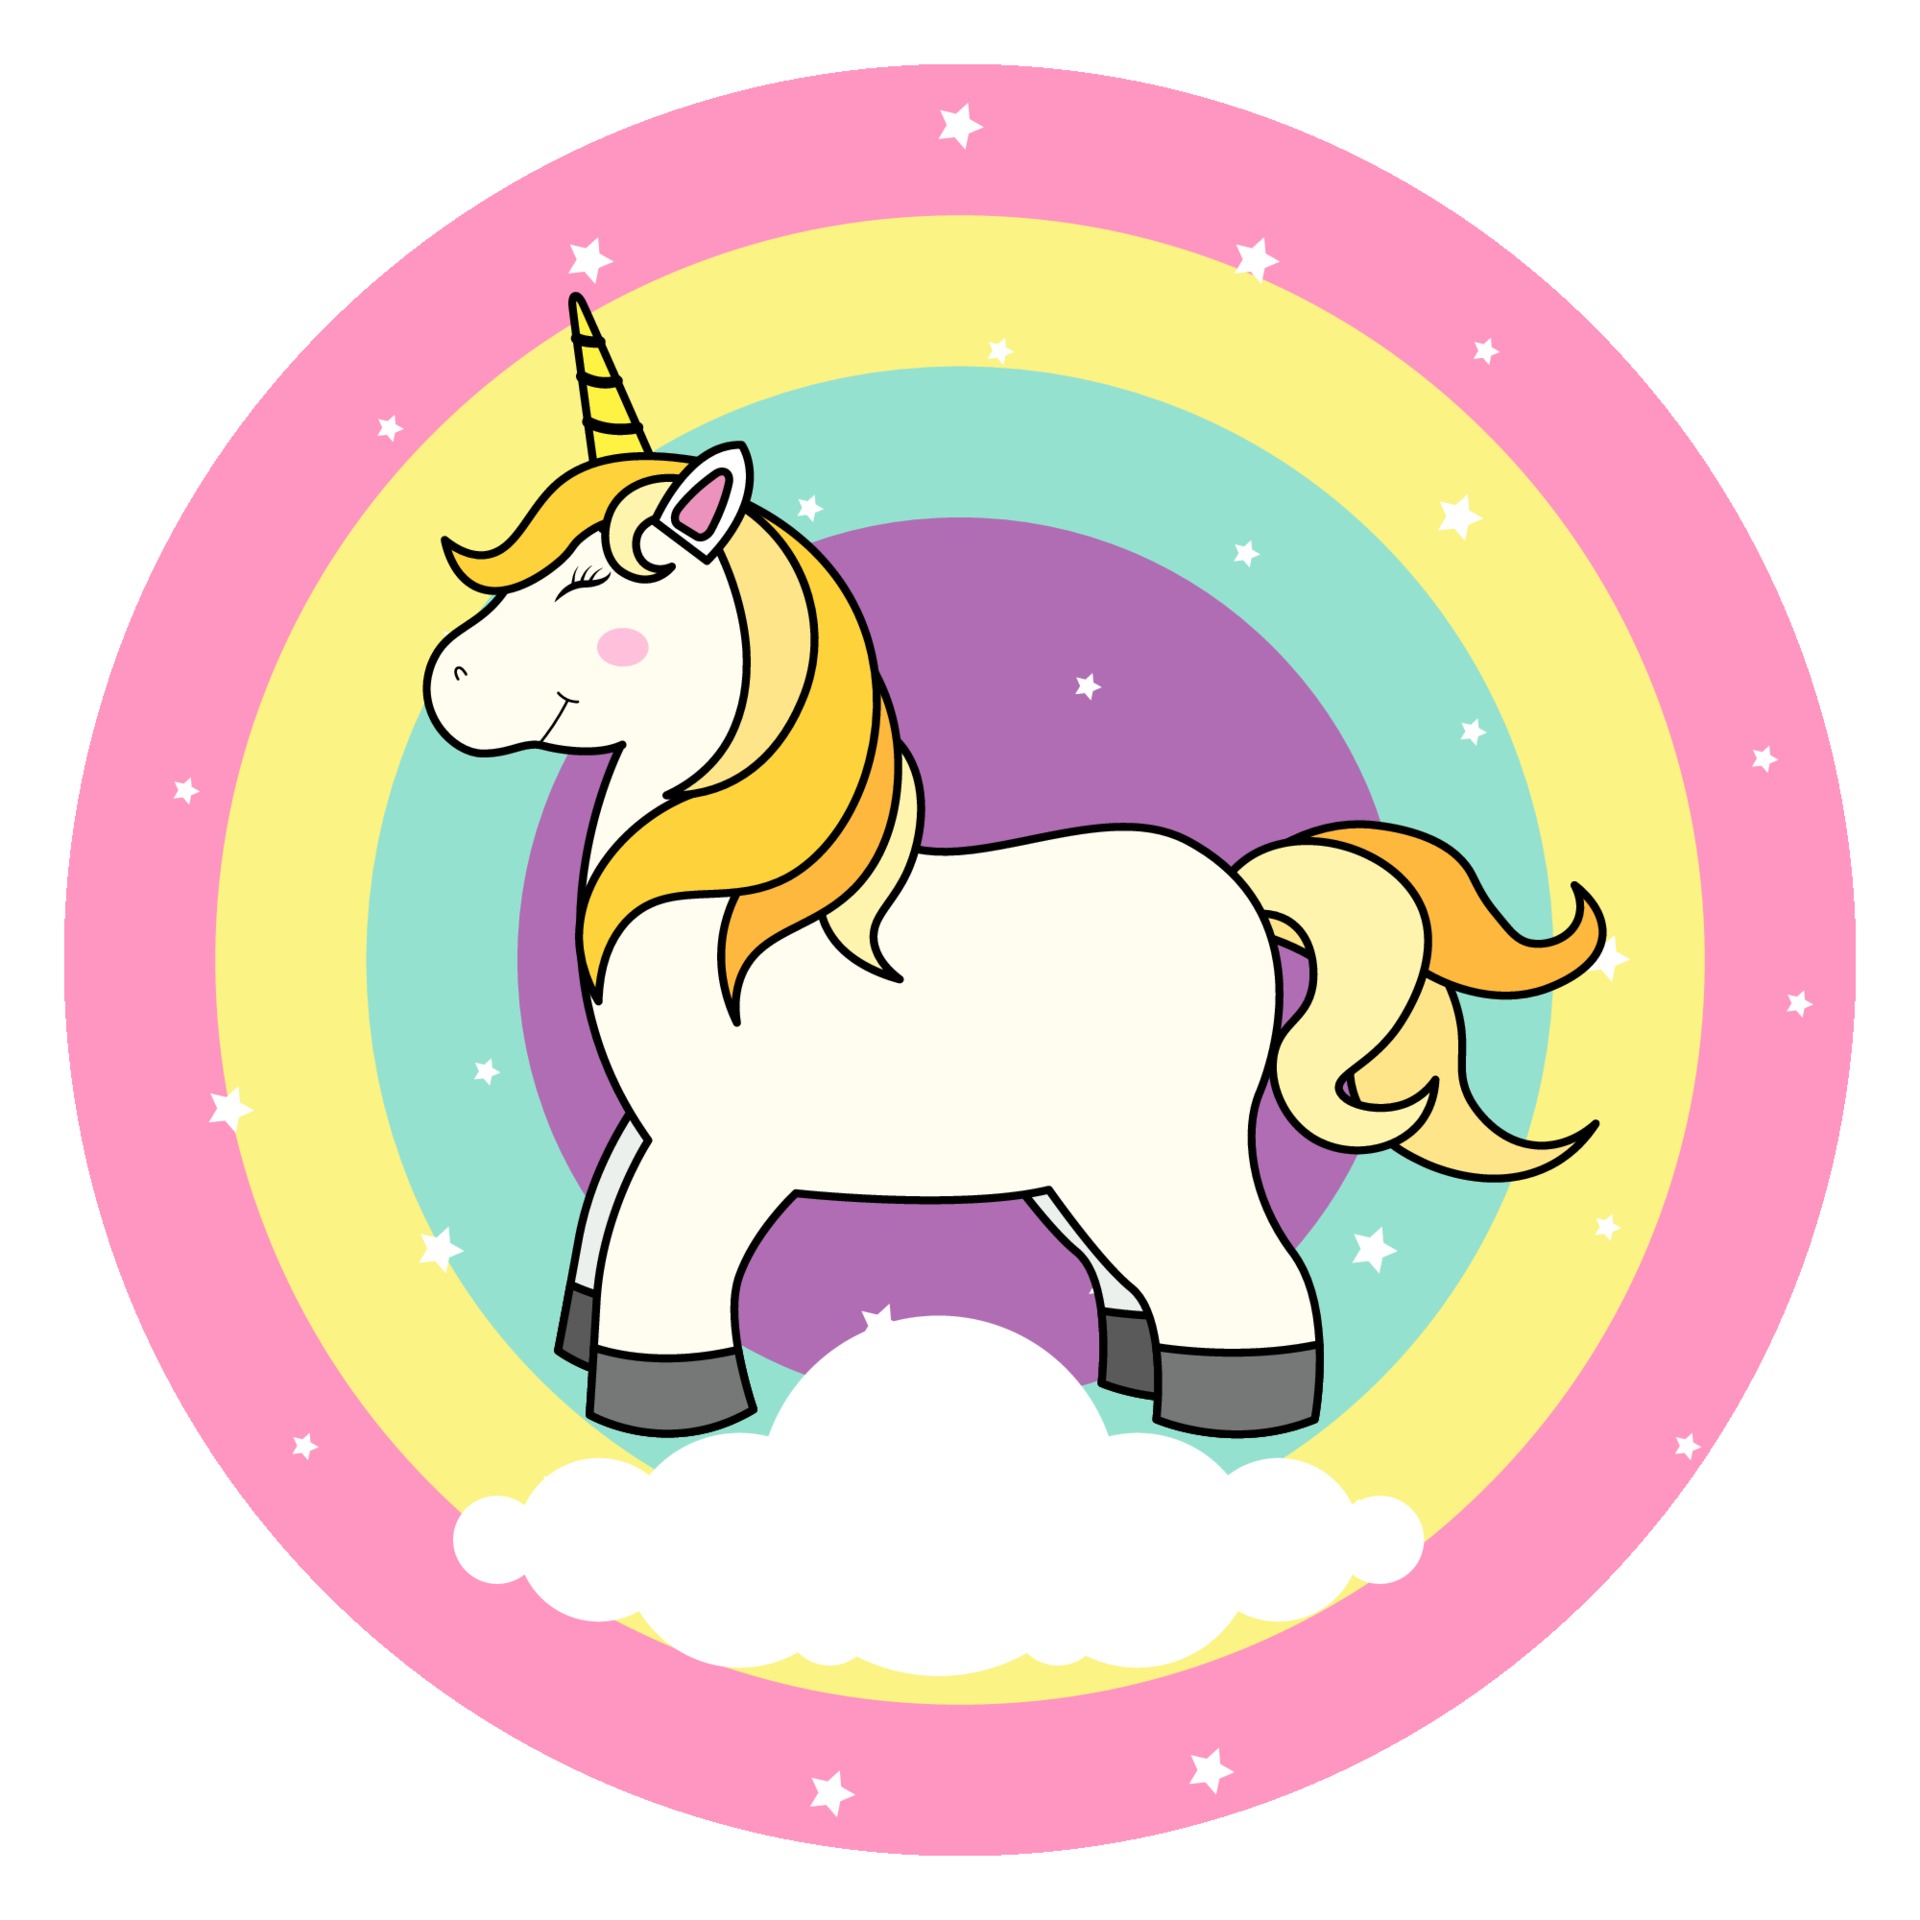 Cute Cartoon Unicorn On Cloud And Rainbow For Print T Shirt Or Sticker